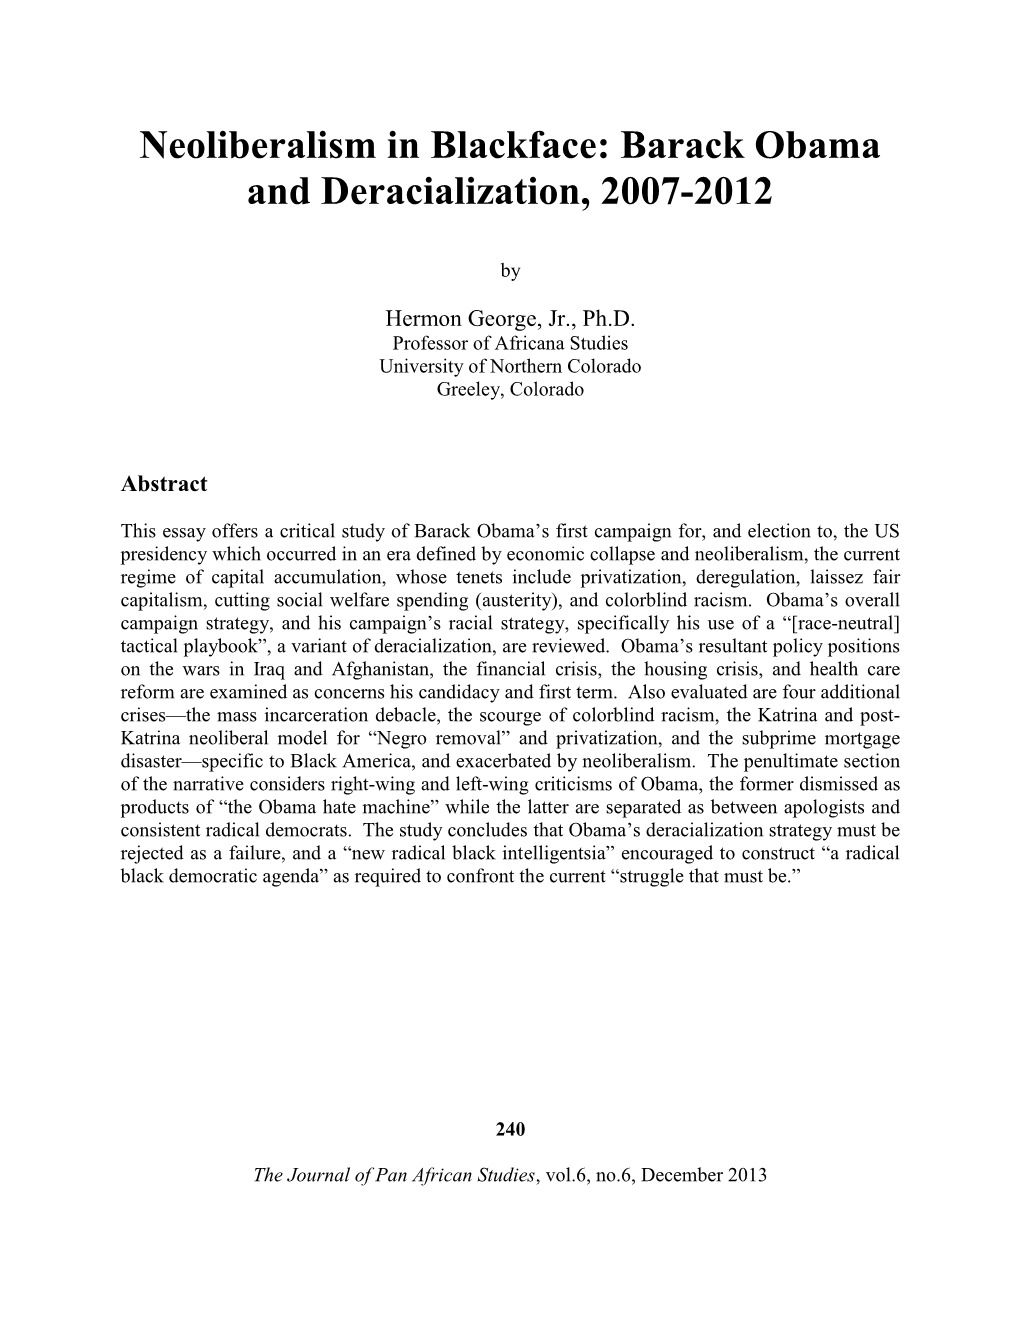 Neoliberalism in Blackface: Barack Obama and Deracialization, 2007-2012